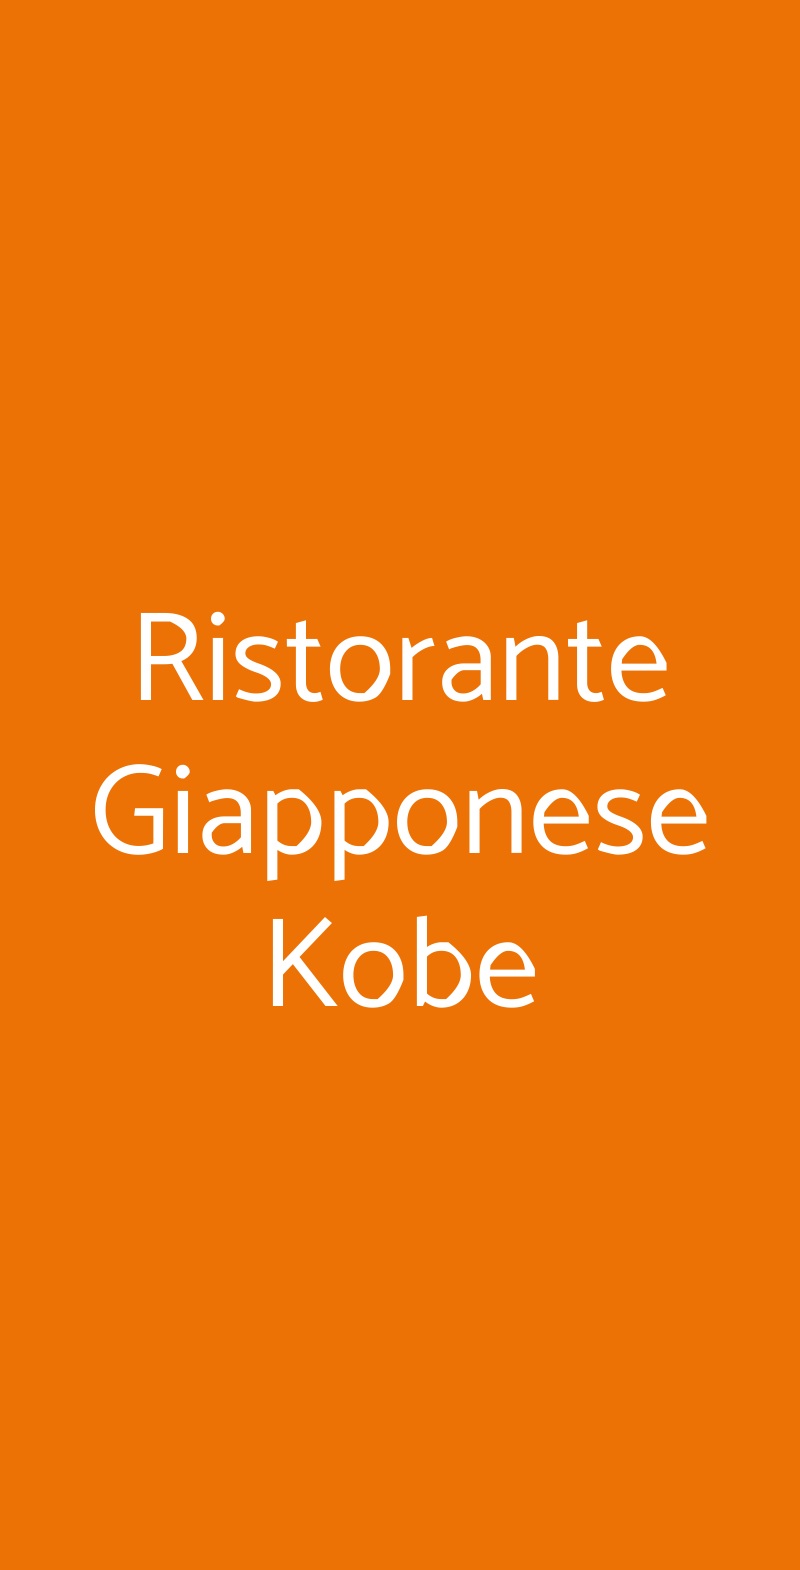 Ristorante Giapponese Kobe Verona menù 1 pagina